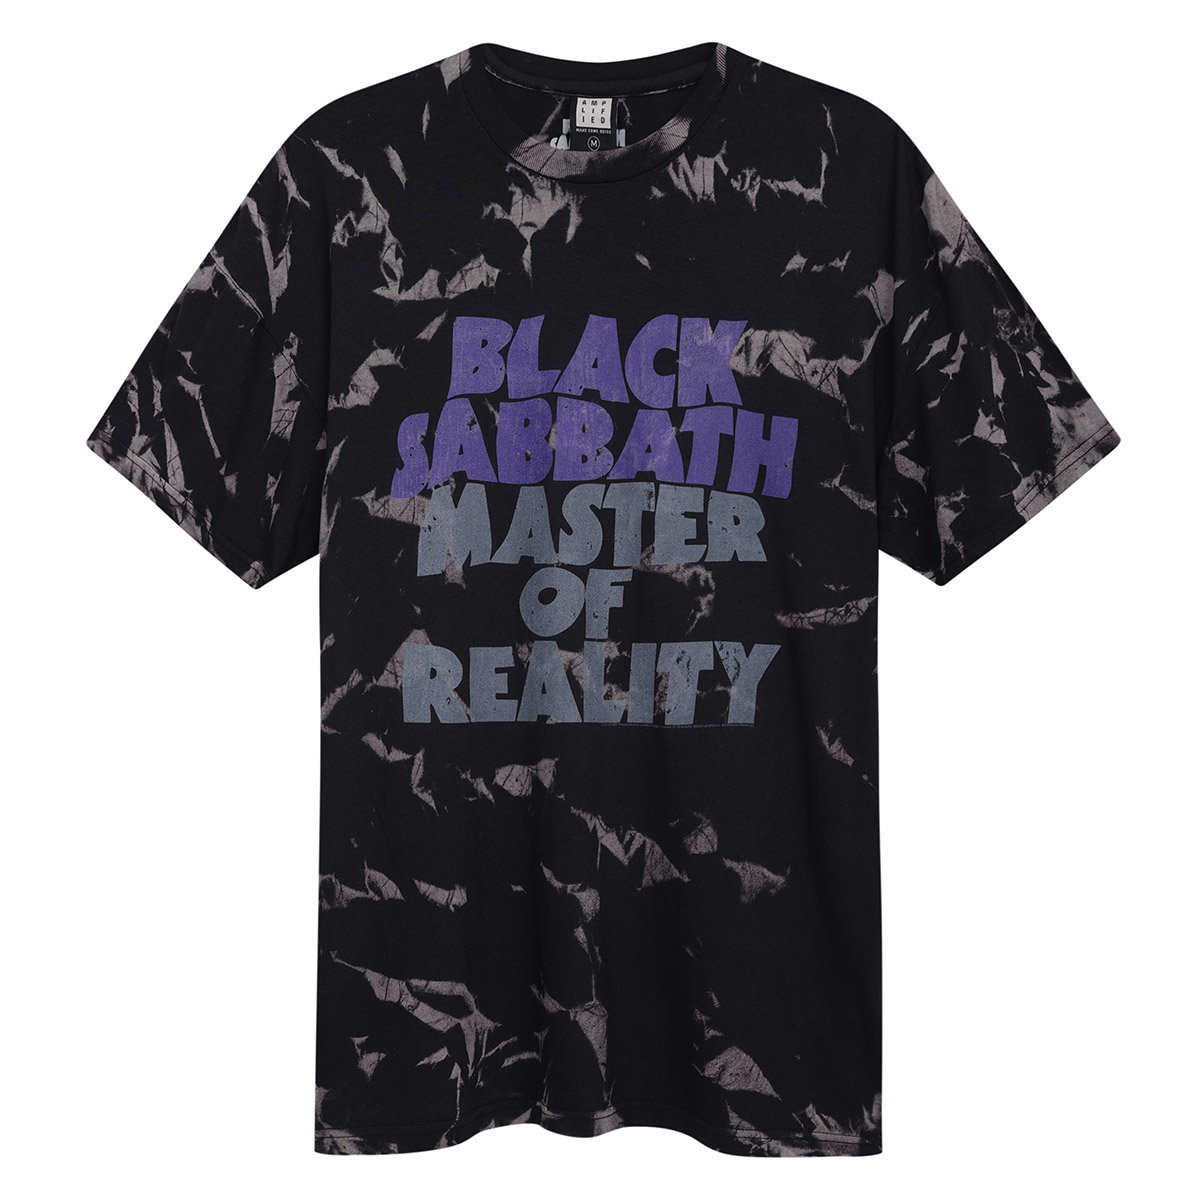 Black Sabbath Masters of Reality